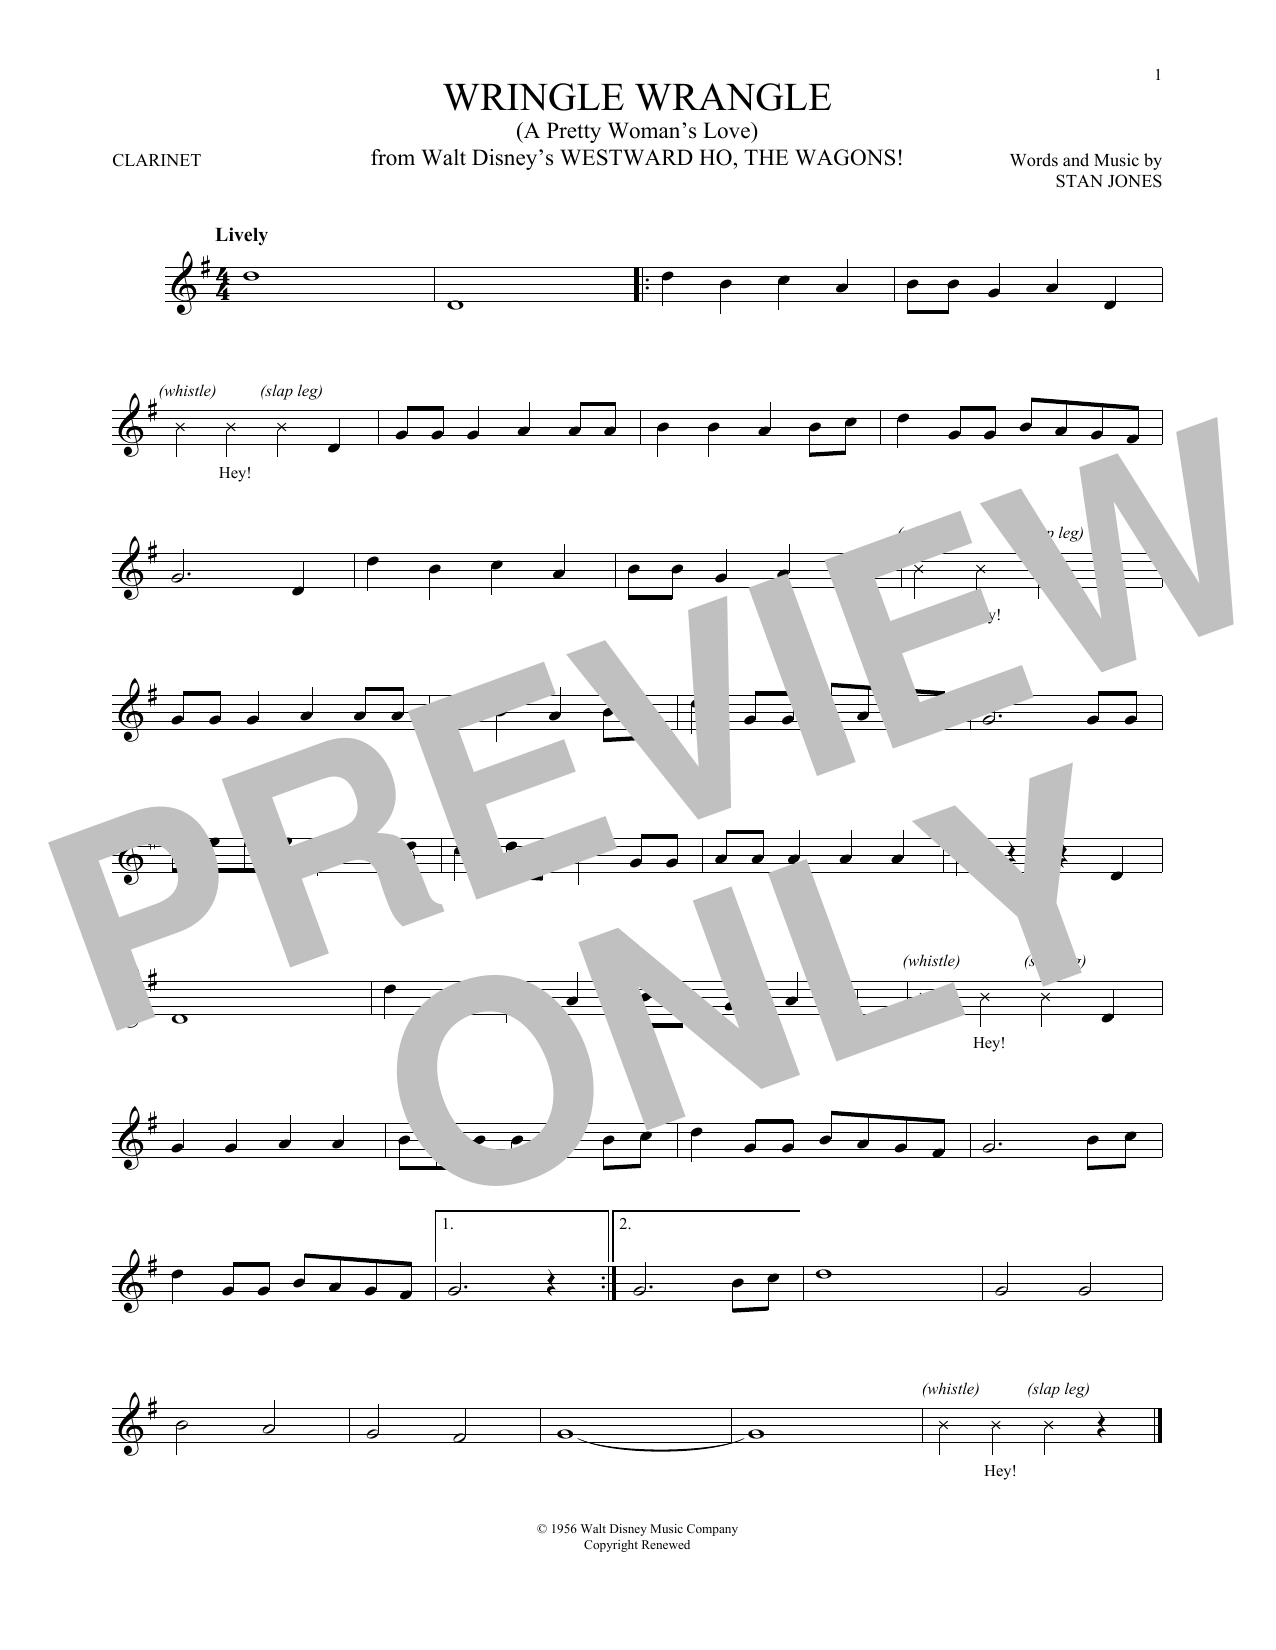 Stan Jones Wringle Wrangle (A Pretty Woman's Love) Sheet Music Notes & Chords for Tenor Saxophone - Download or Print PDF